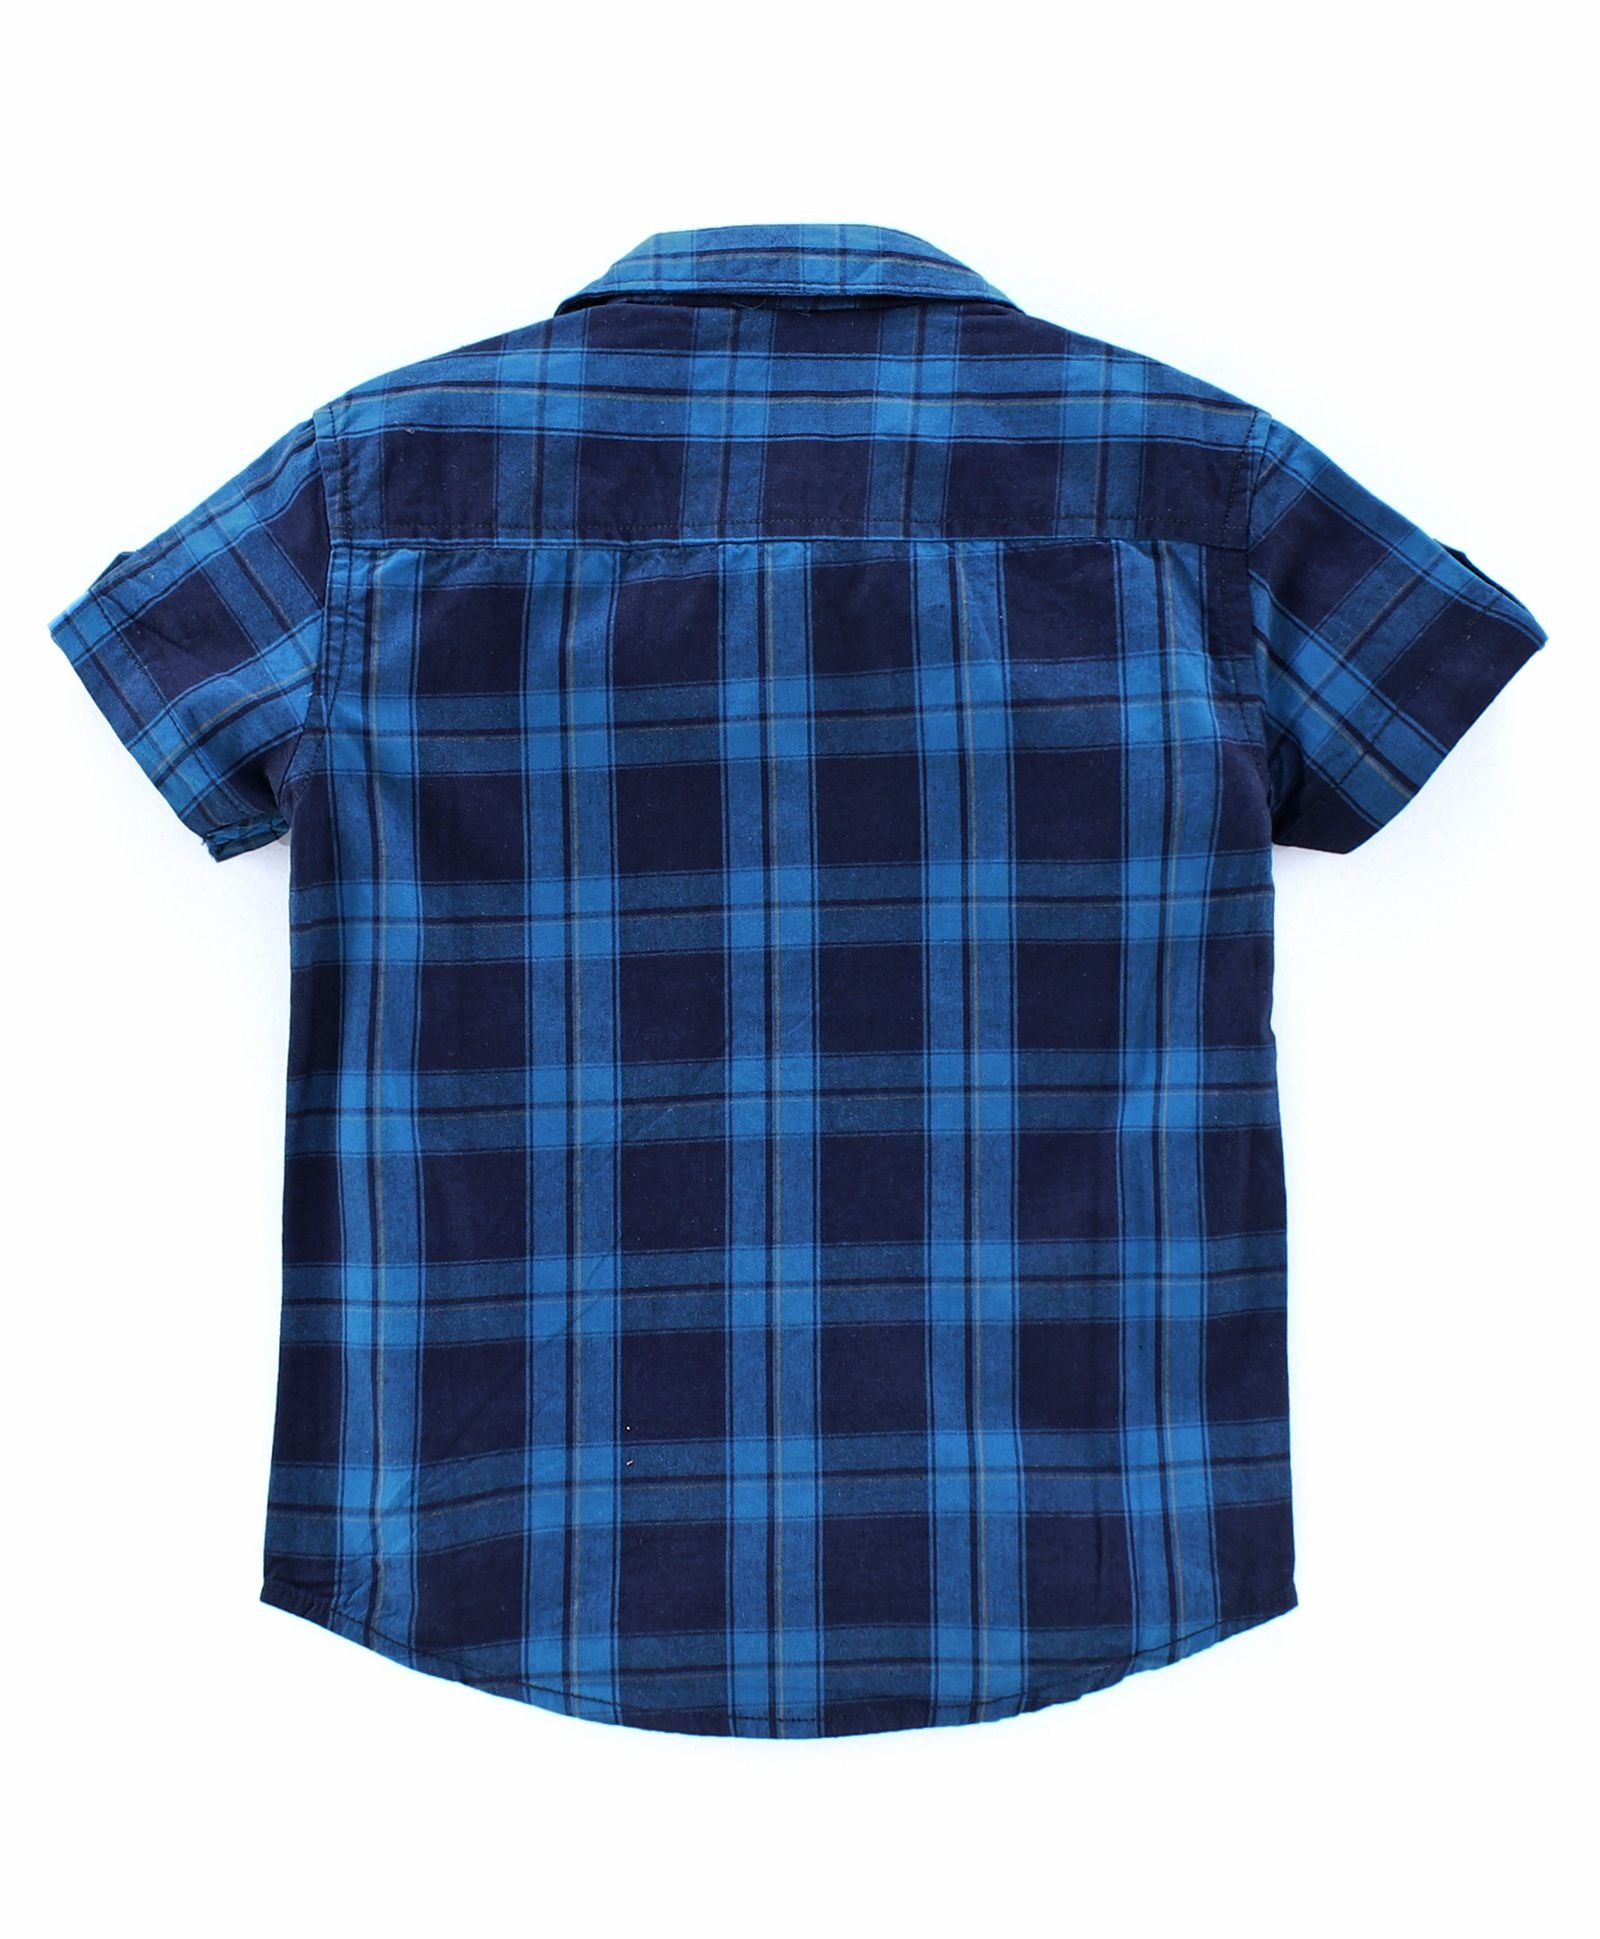 Boys Full Sleeves Checked Shirt - Blue